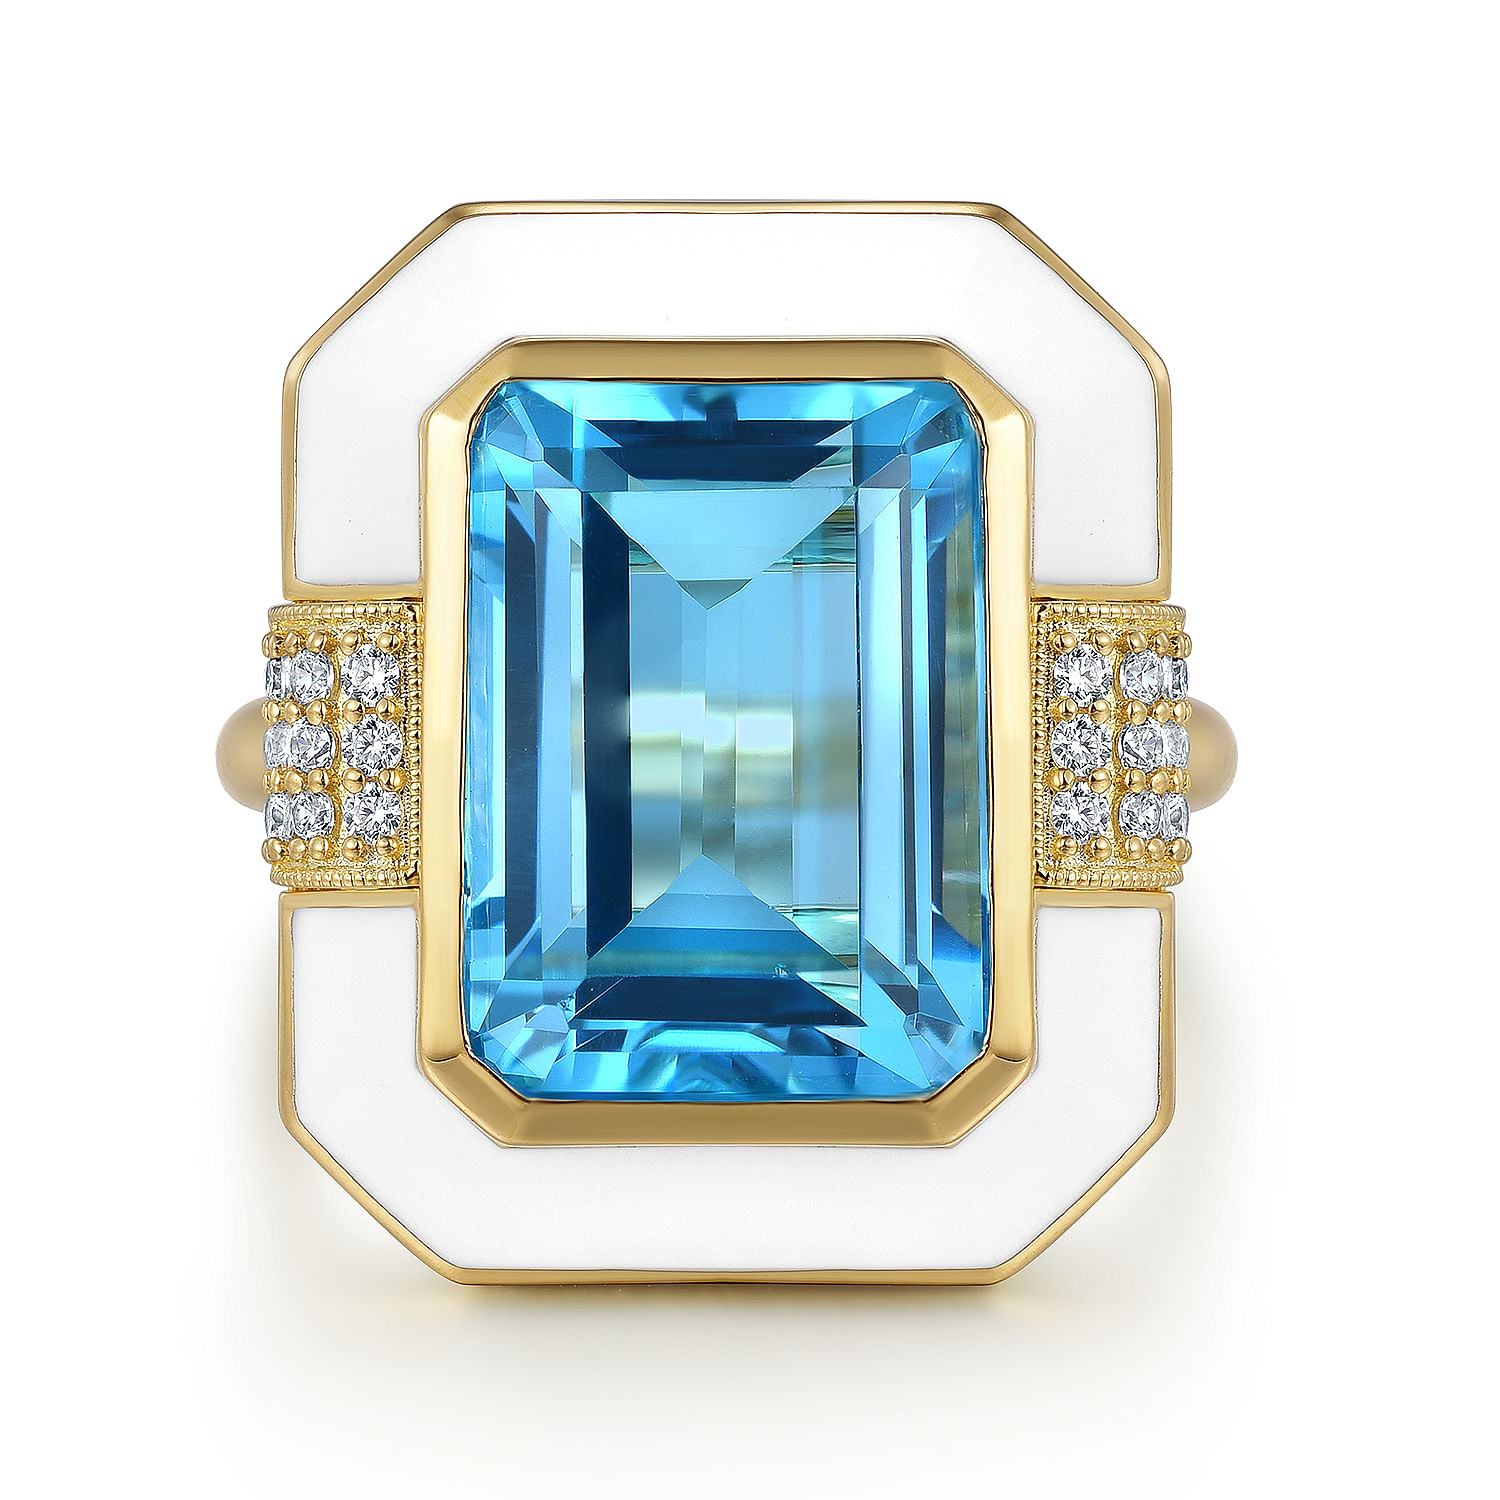 14K Yellow Gold Diamond and Emerald Cut Blue Topaz Fashion Ring With White Enamel